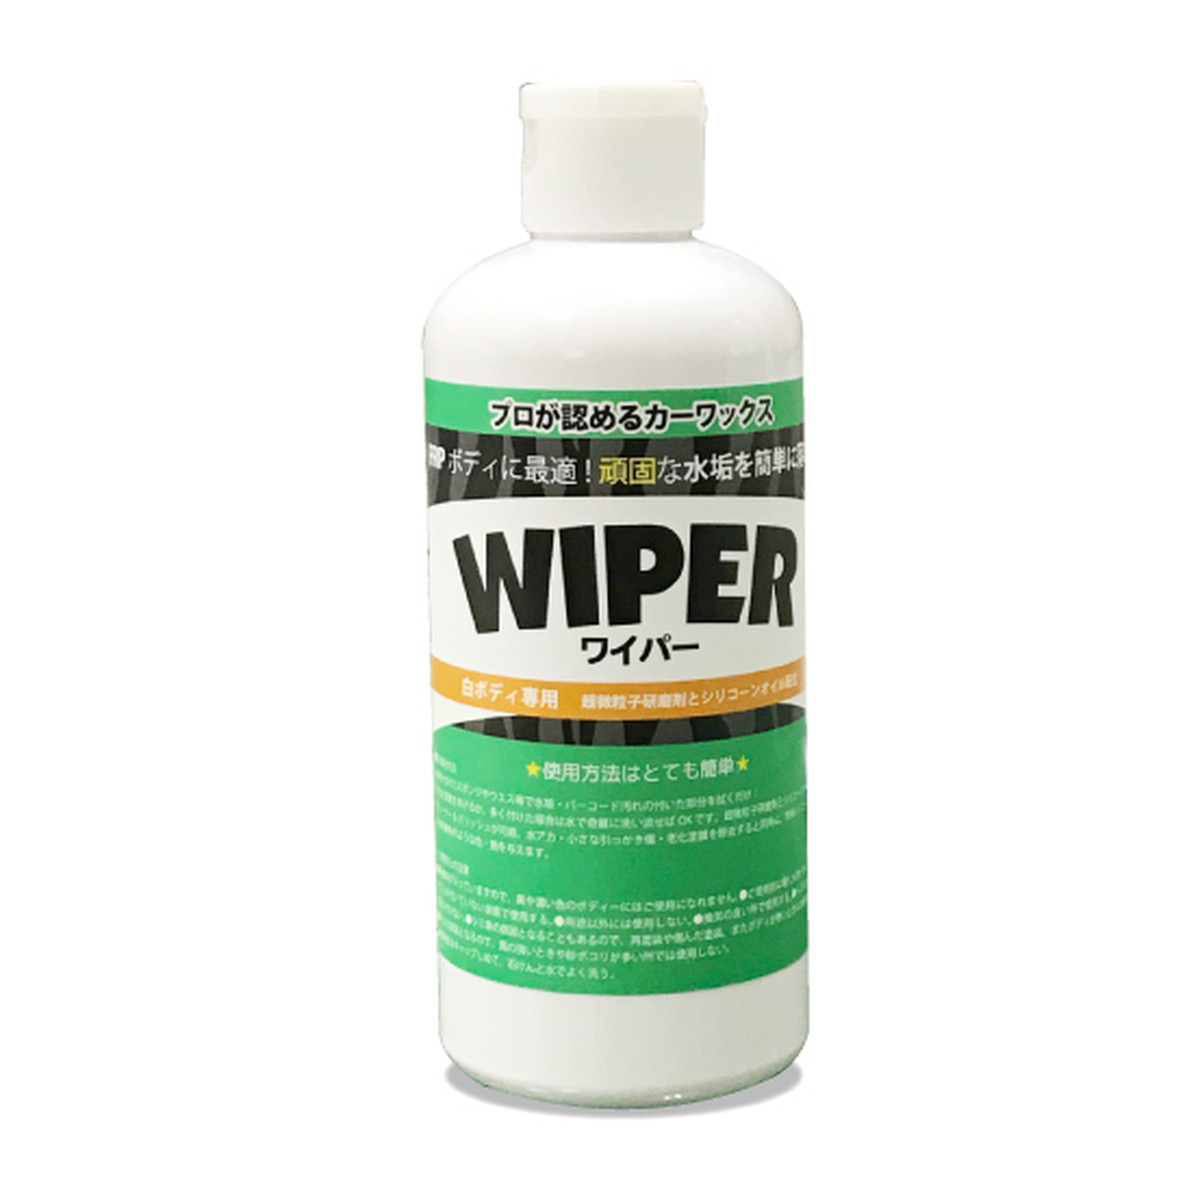 Frp白ボディ専用 水垢 バーコードを簡単に落す ワックス Wiper ワイパー パウダーミルク